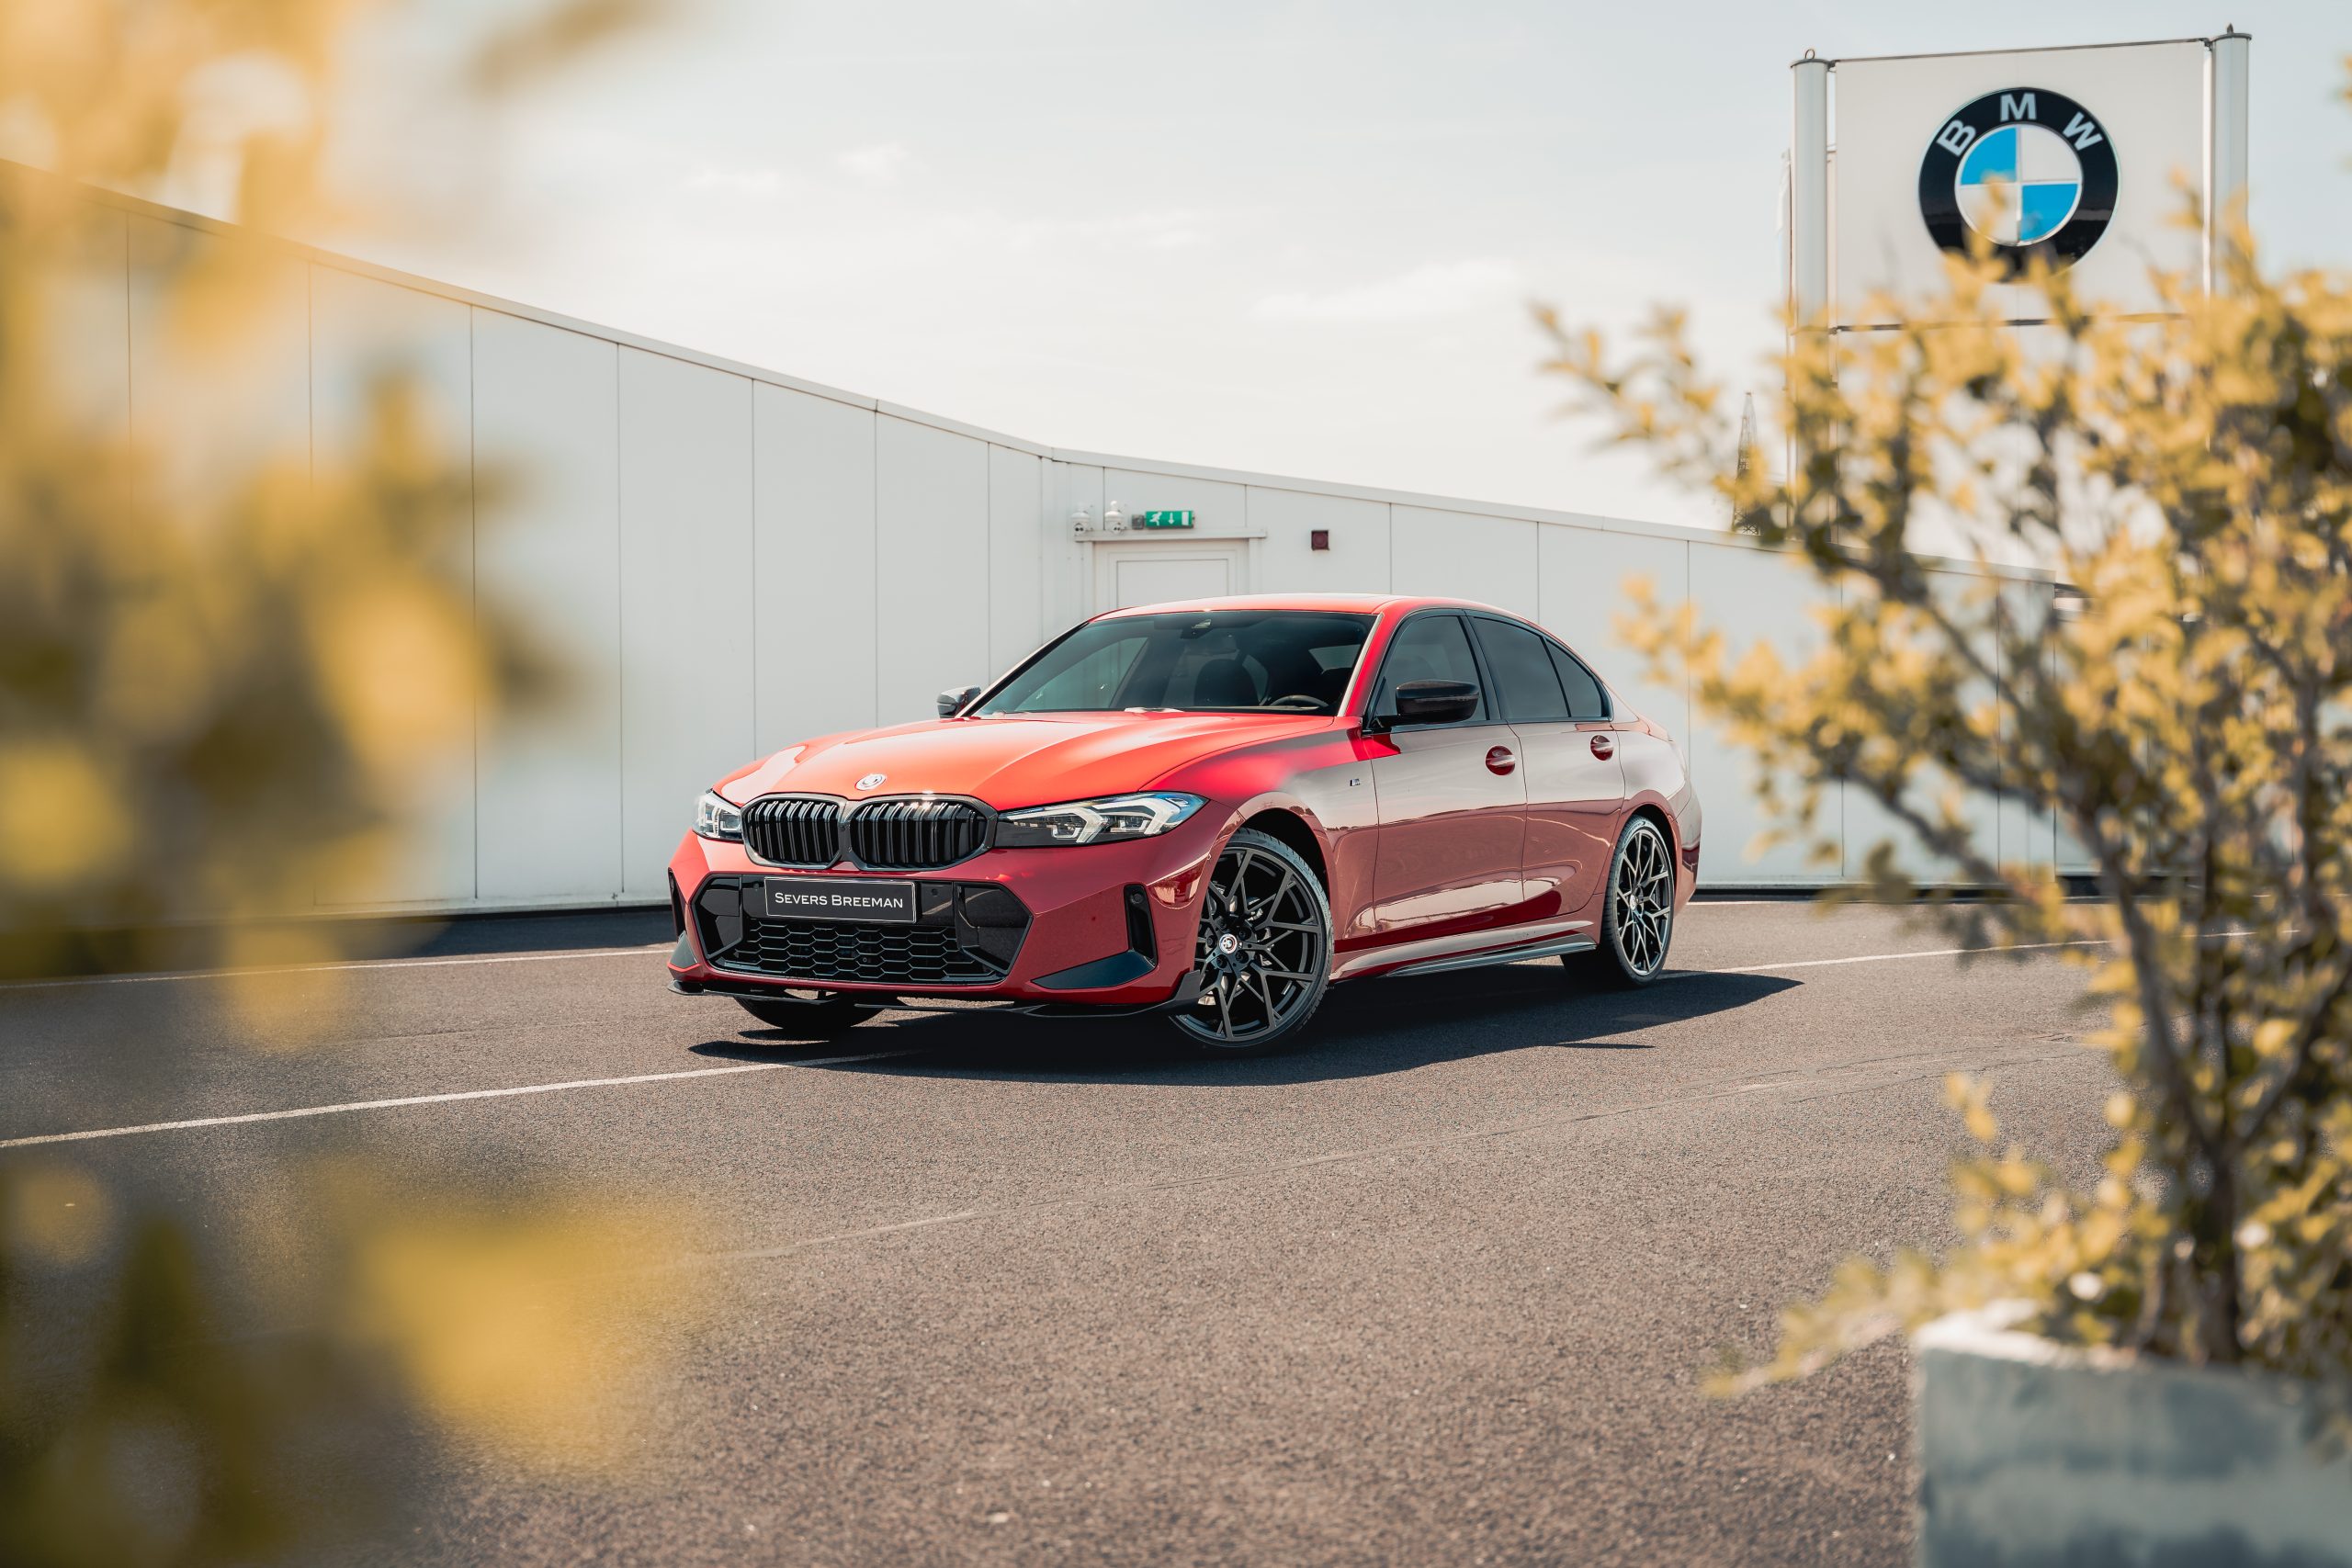 Grab Emblem & Hood Roundel for BMW | Buy at AutoTecknic